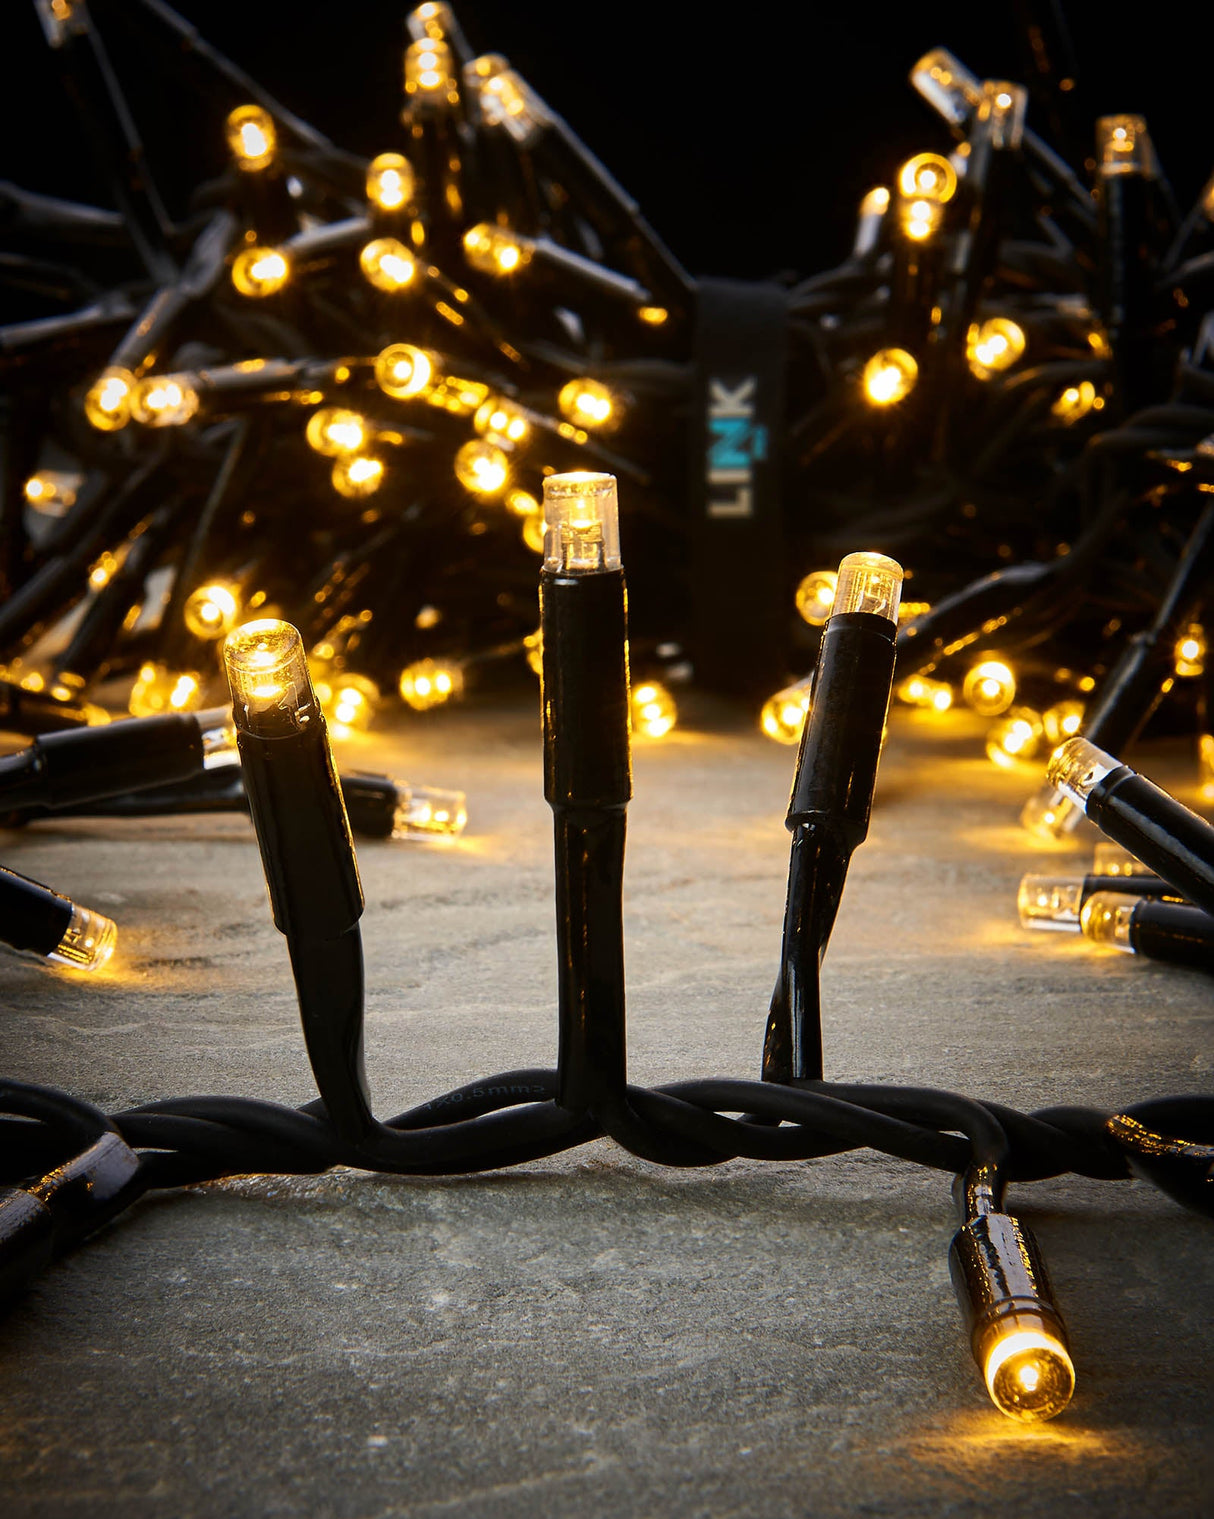 LINK PRO LED Cluster Lights, Black Cable, Warm White / White